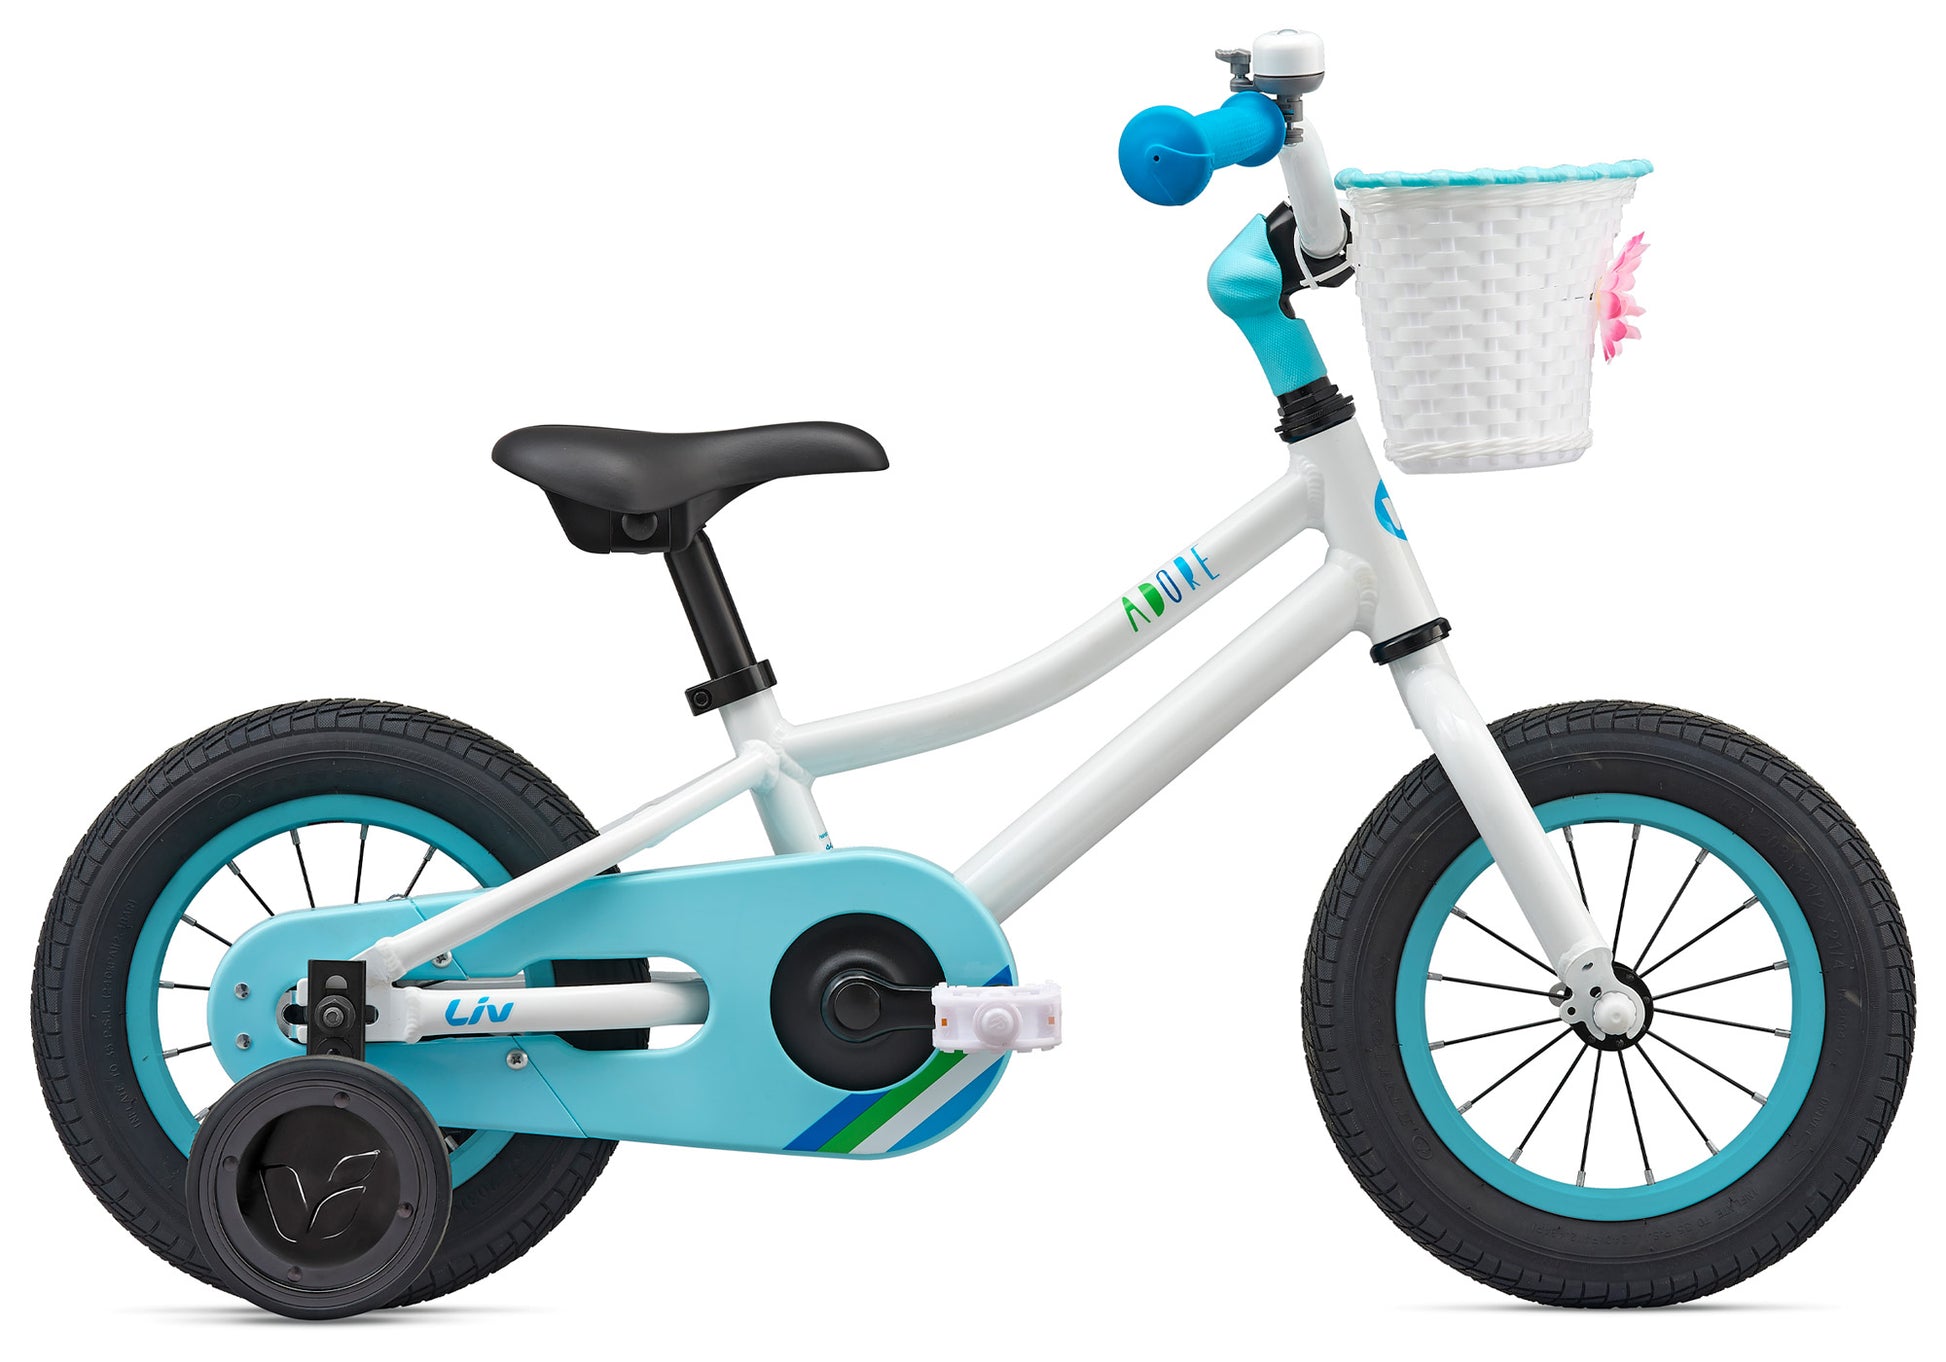 2022 Giant Liv Adore 12", Childrens Bike, White - Rider height: 85-102cm buy online at Woolys Wheels bike shop Sydney